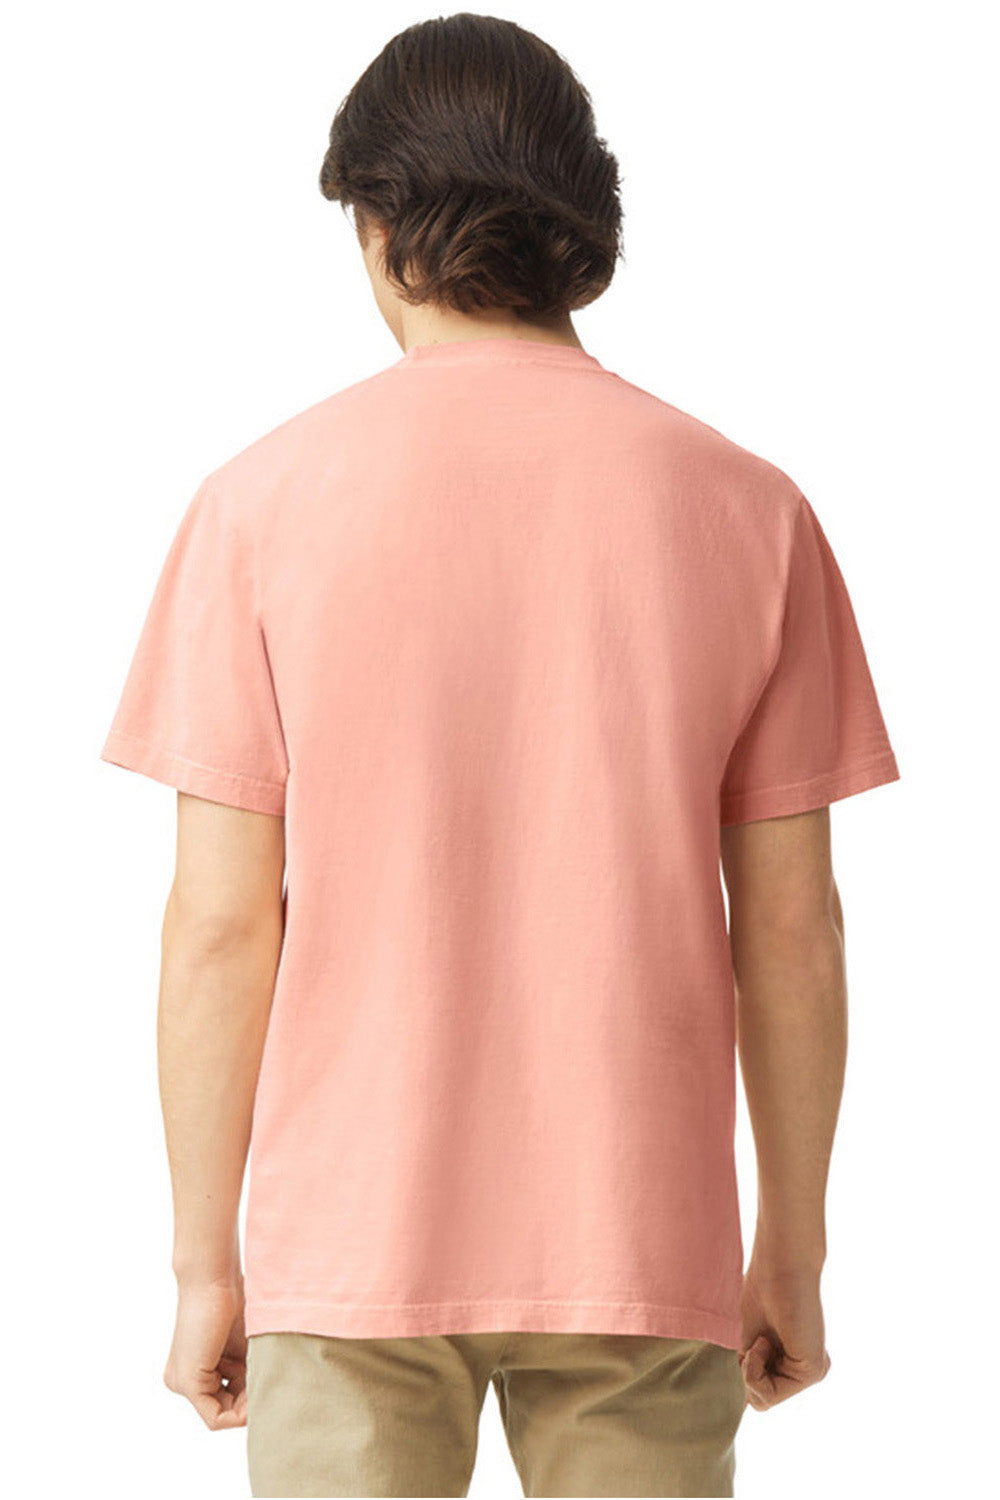 Comfort Colors 1717/C1717 Mens Short Sleeve Crewneck T-Shirt Peachy Back